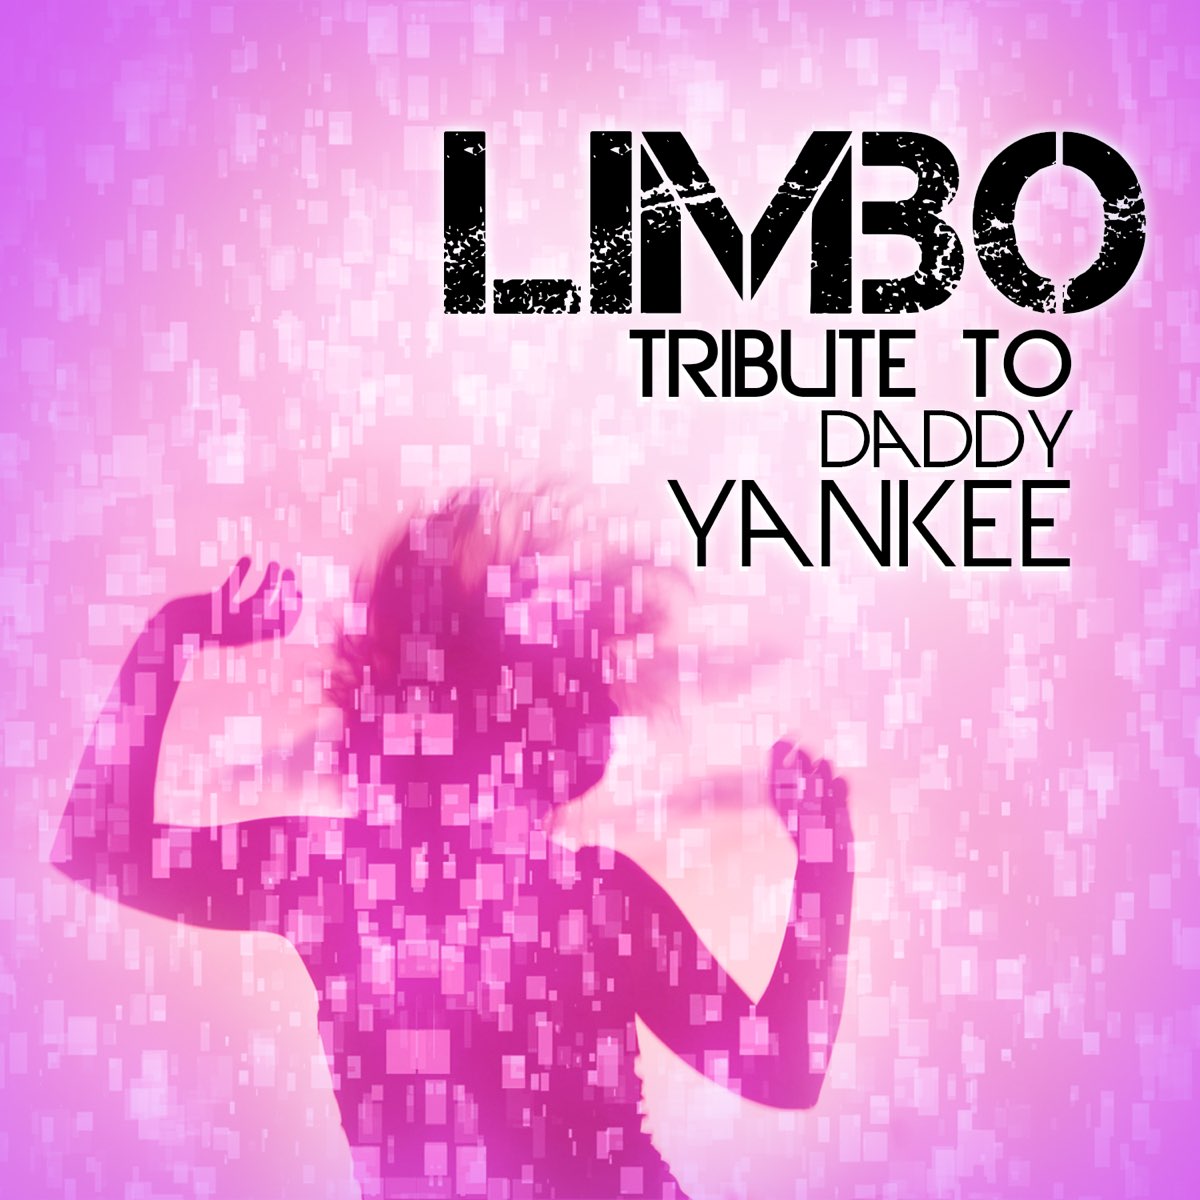 Daddy Yankee Limbo фото. Limbo обложка песни Daddy Yankee. Лимбо обложка.